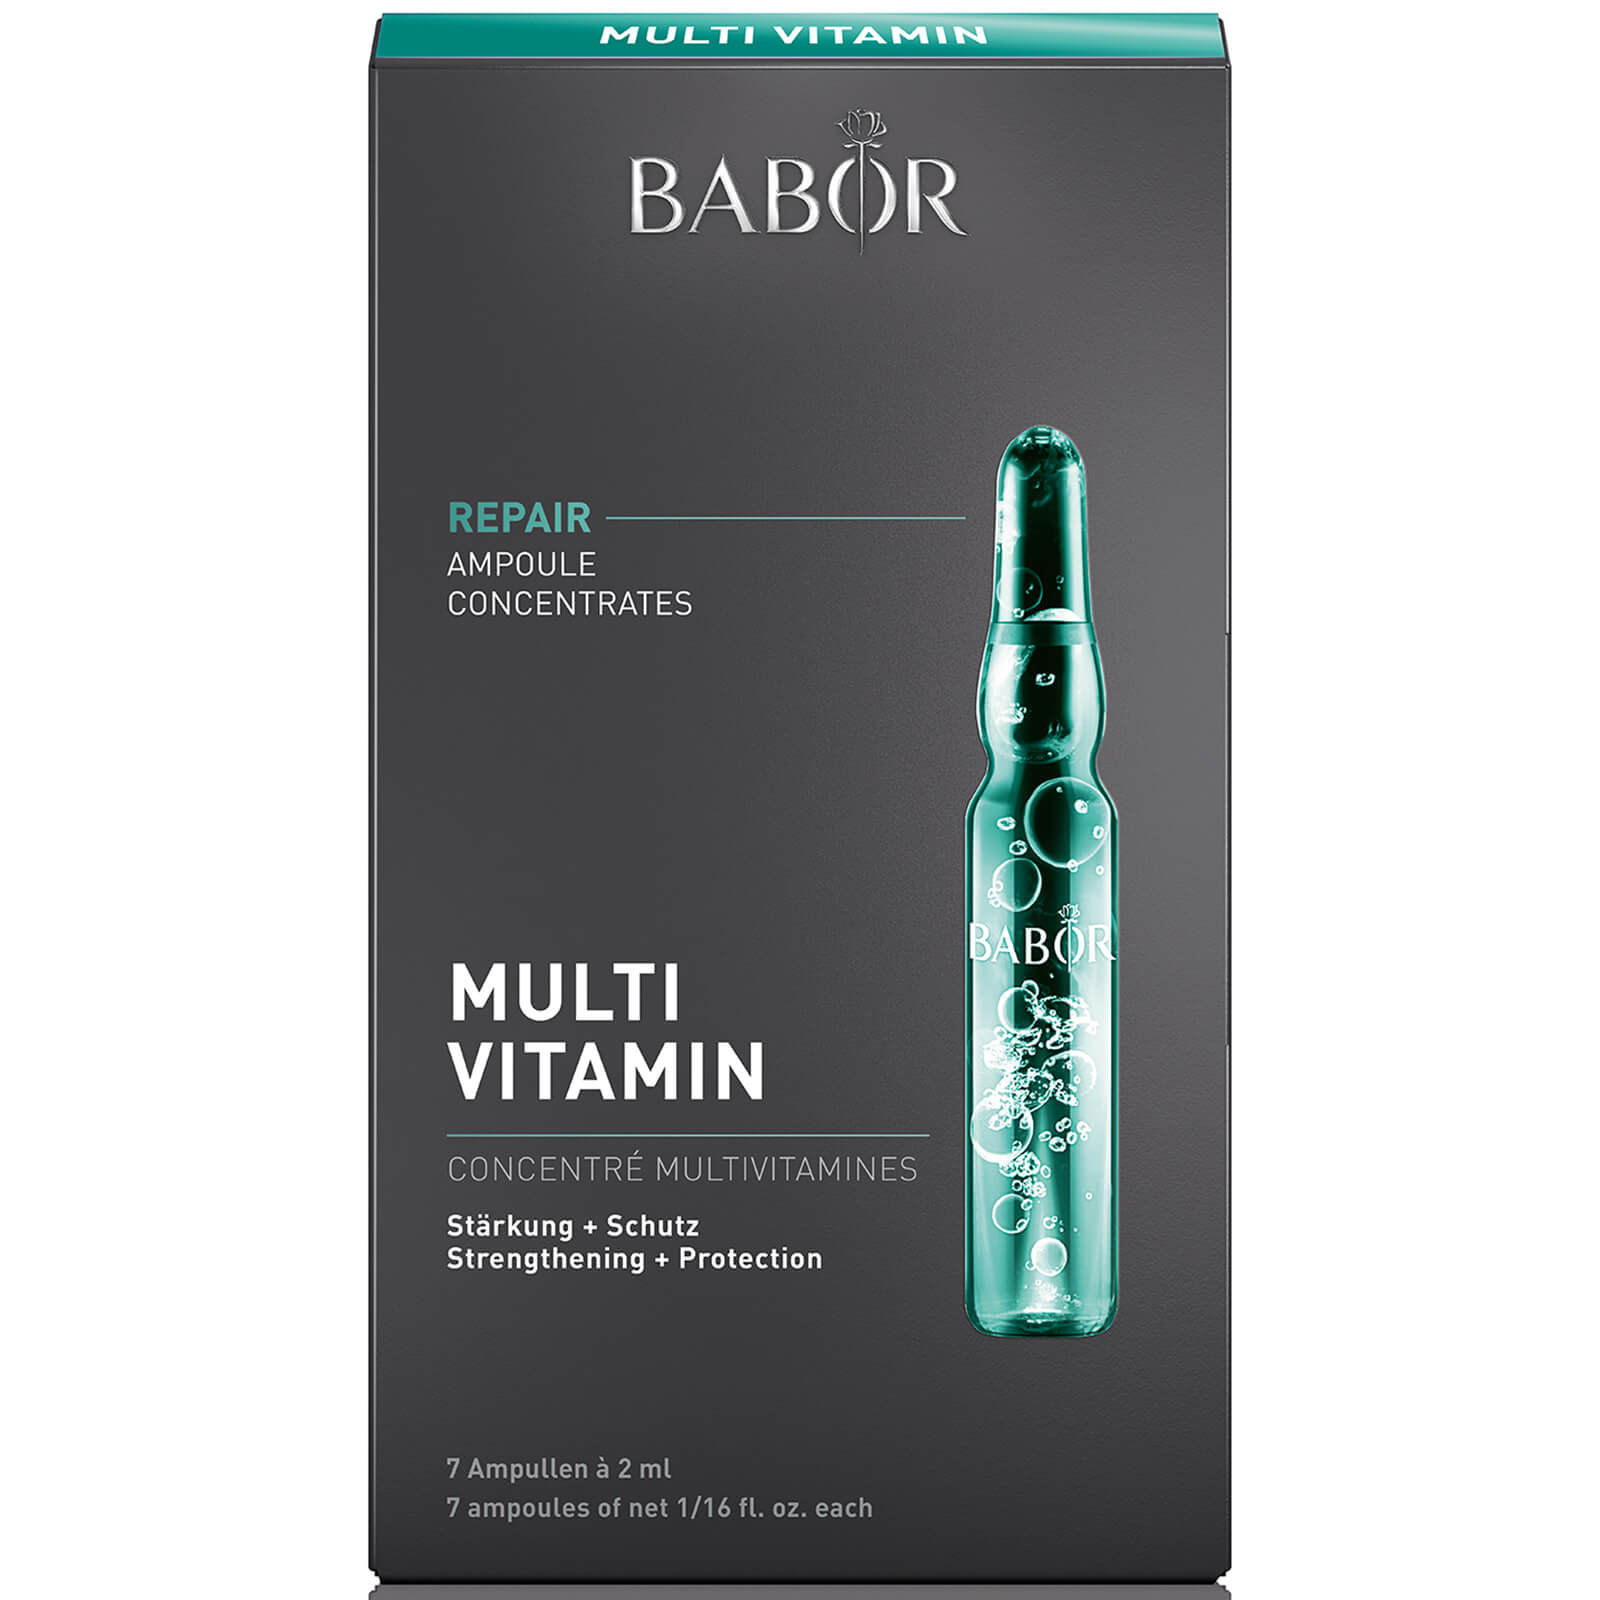 BABOR Ampoule Multi Vitamin 7 x 2ml
					
					| SkinCareRX